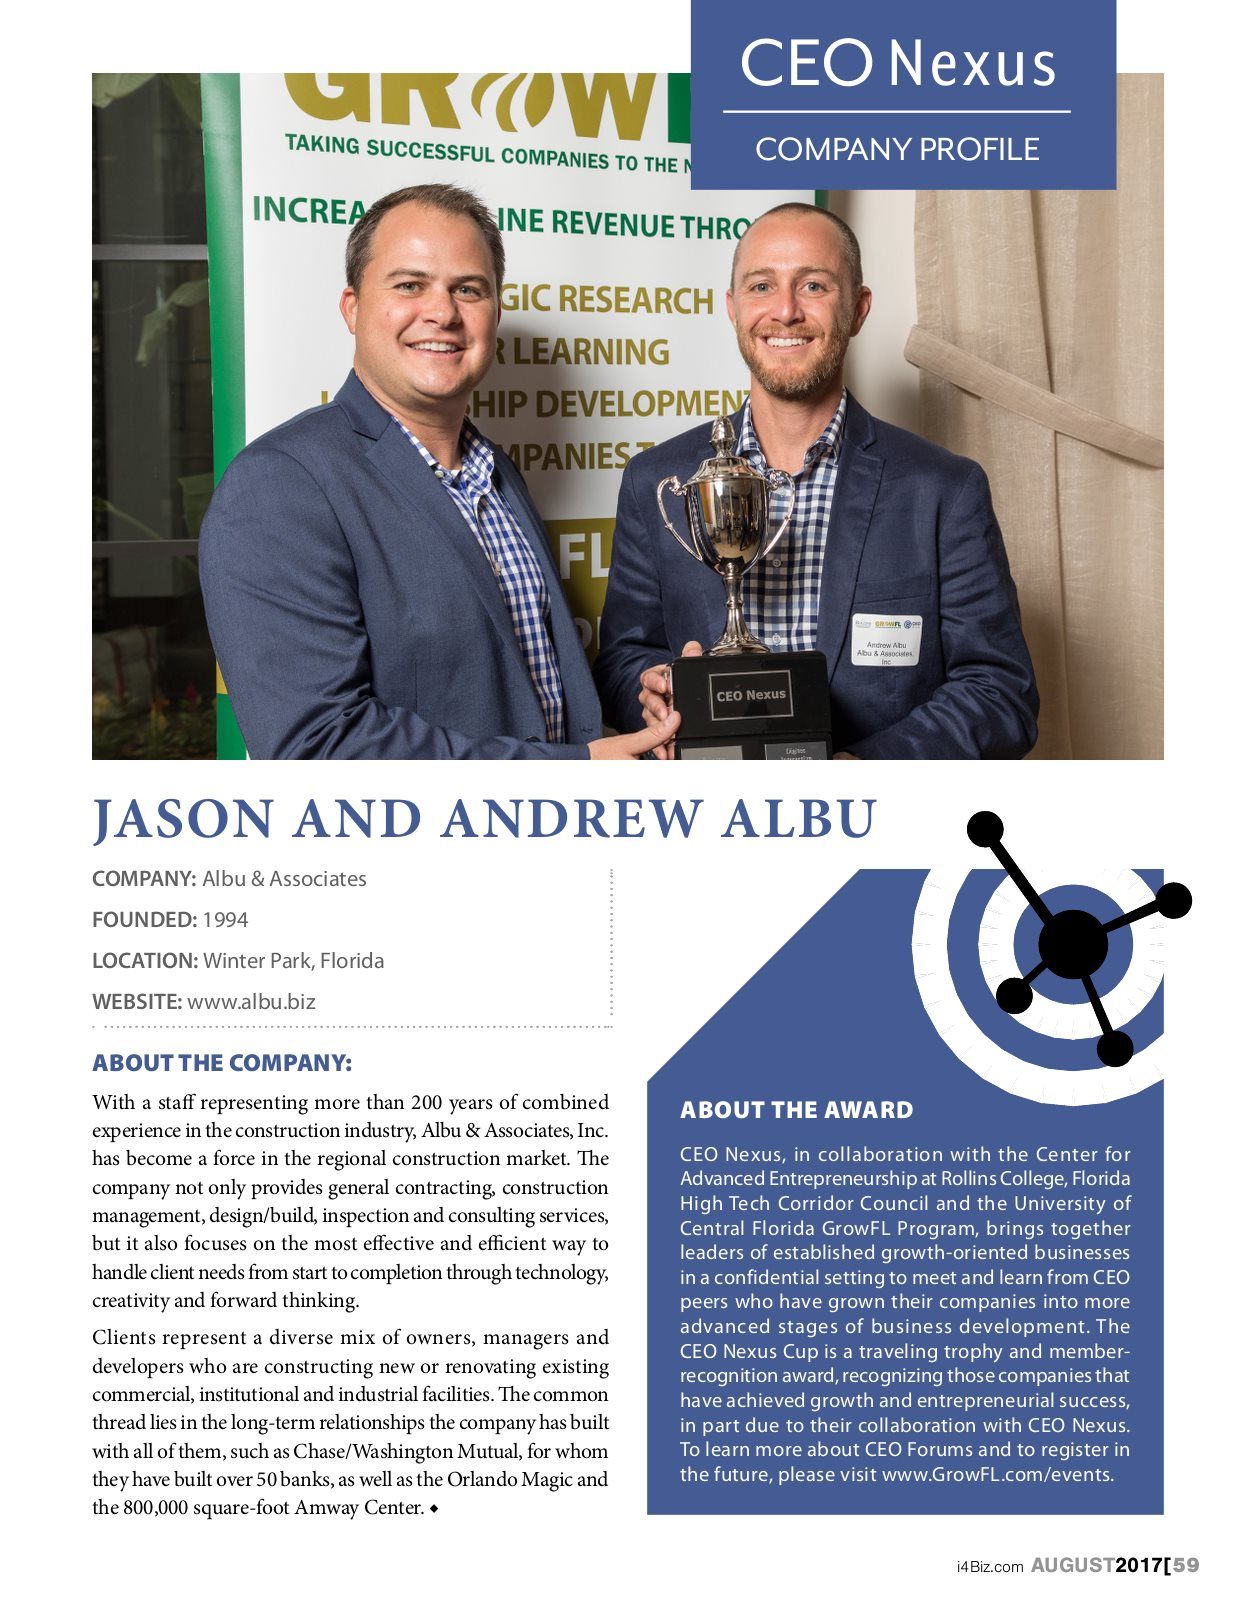 i4 Business Magazine Digital Edition: Albu & Associates, Inc. CEO Nexus Cup